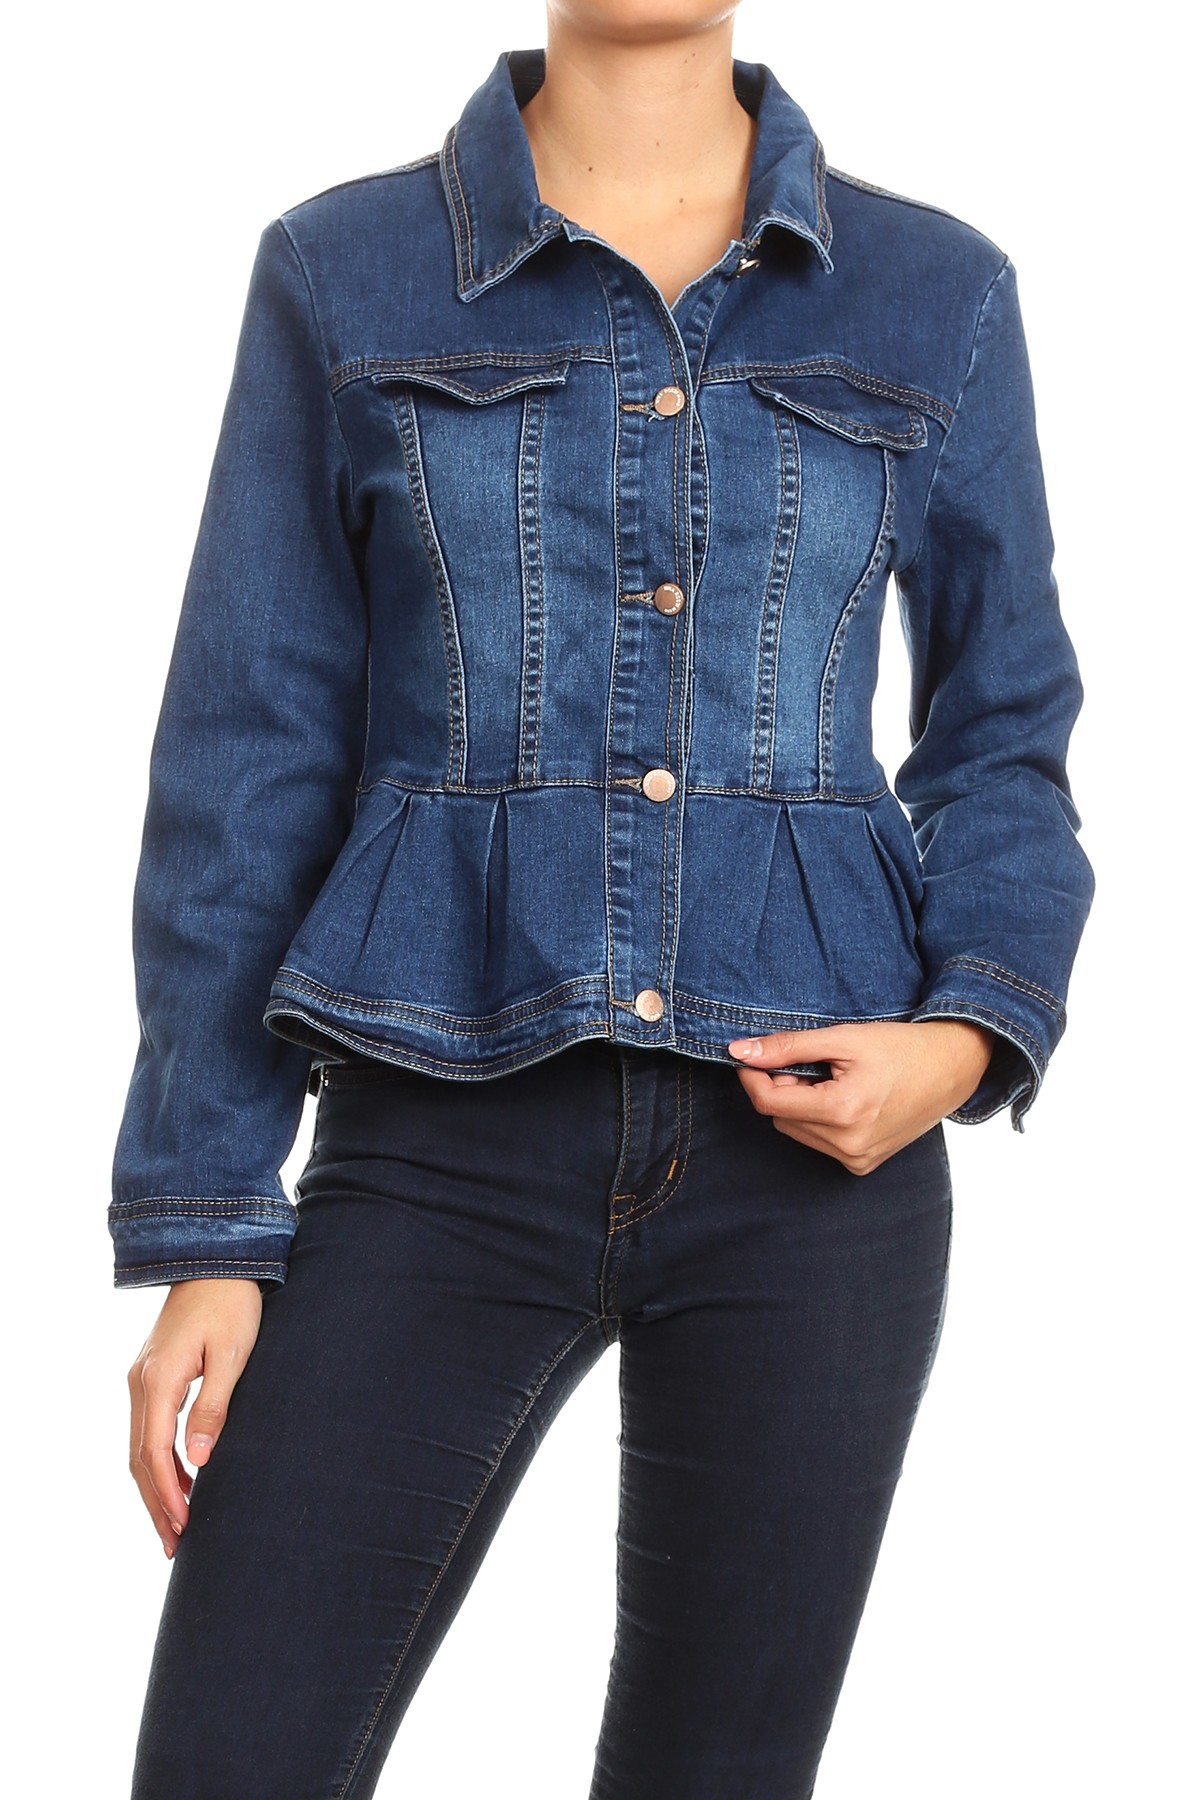 Fashion2Love Women's Plus / Juniors Size Premium Denim Premium Bodice Long Sleeve Jacket - image 1 of 8